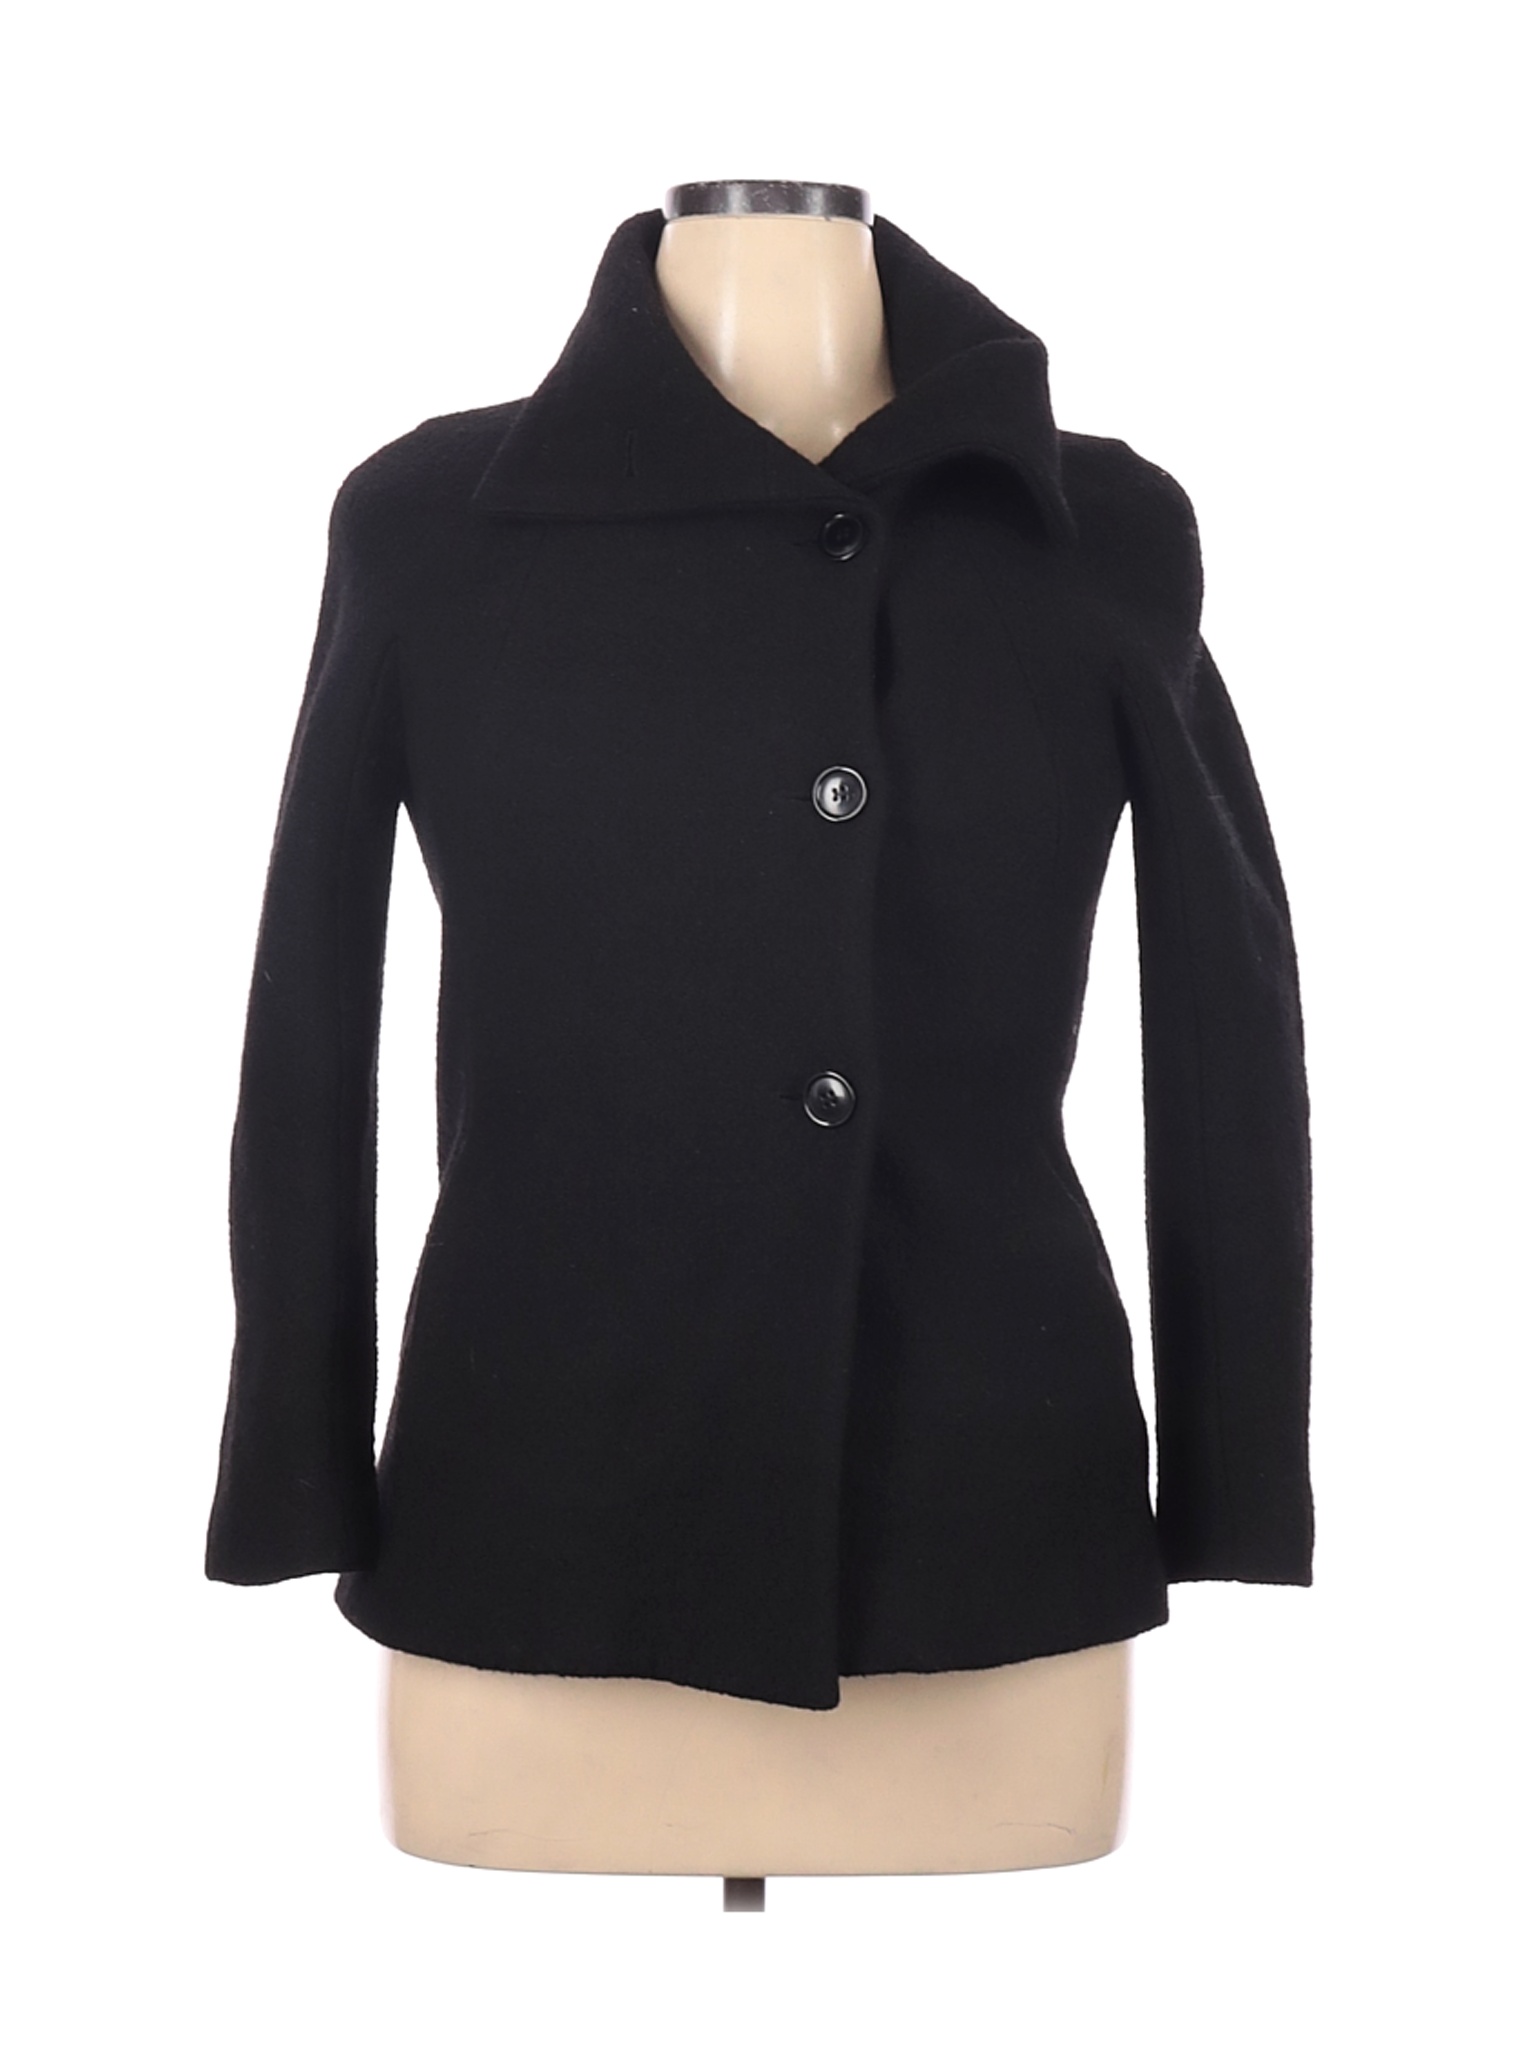 Talbots Women Black Coat 12 Petites | eBay